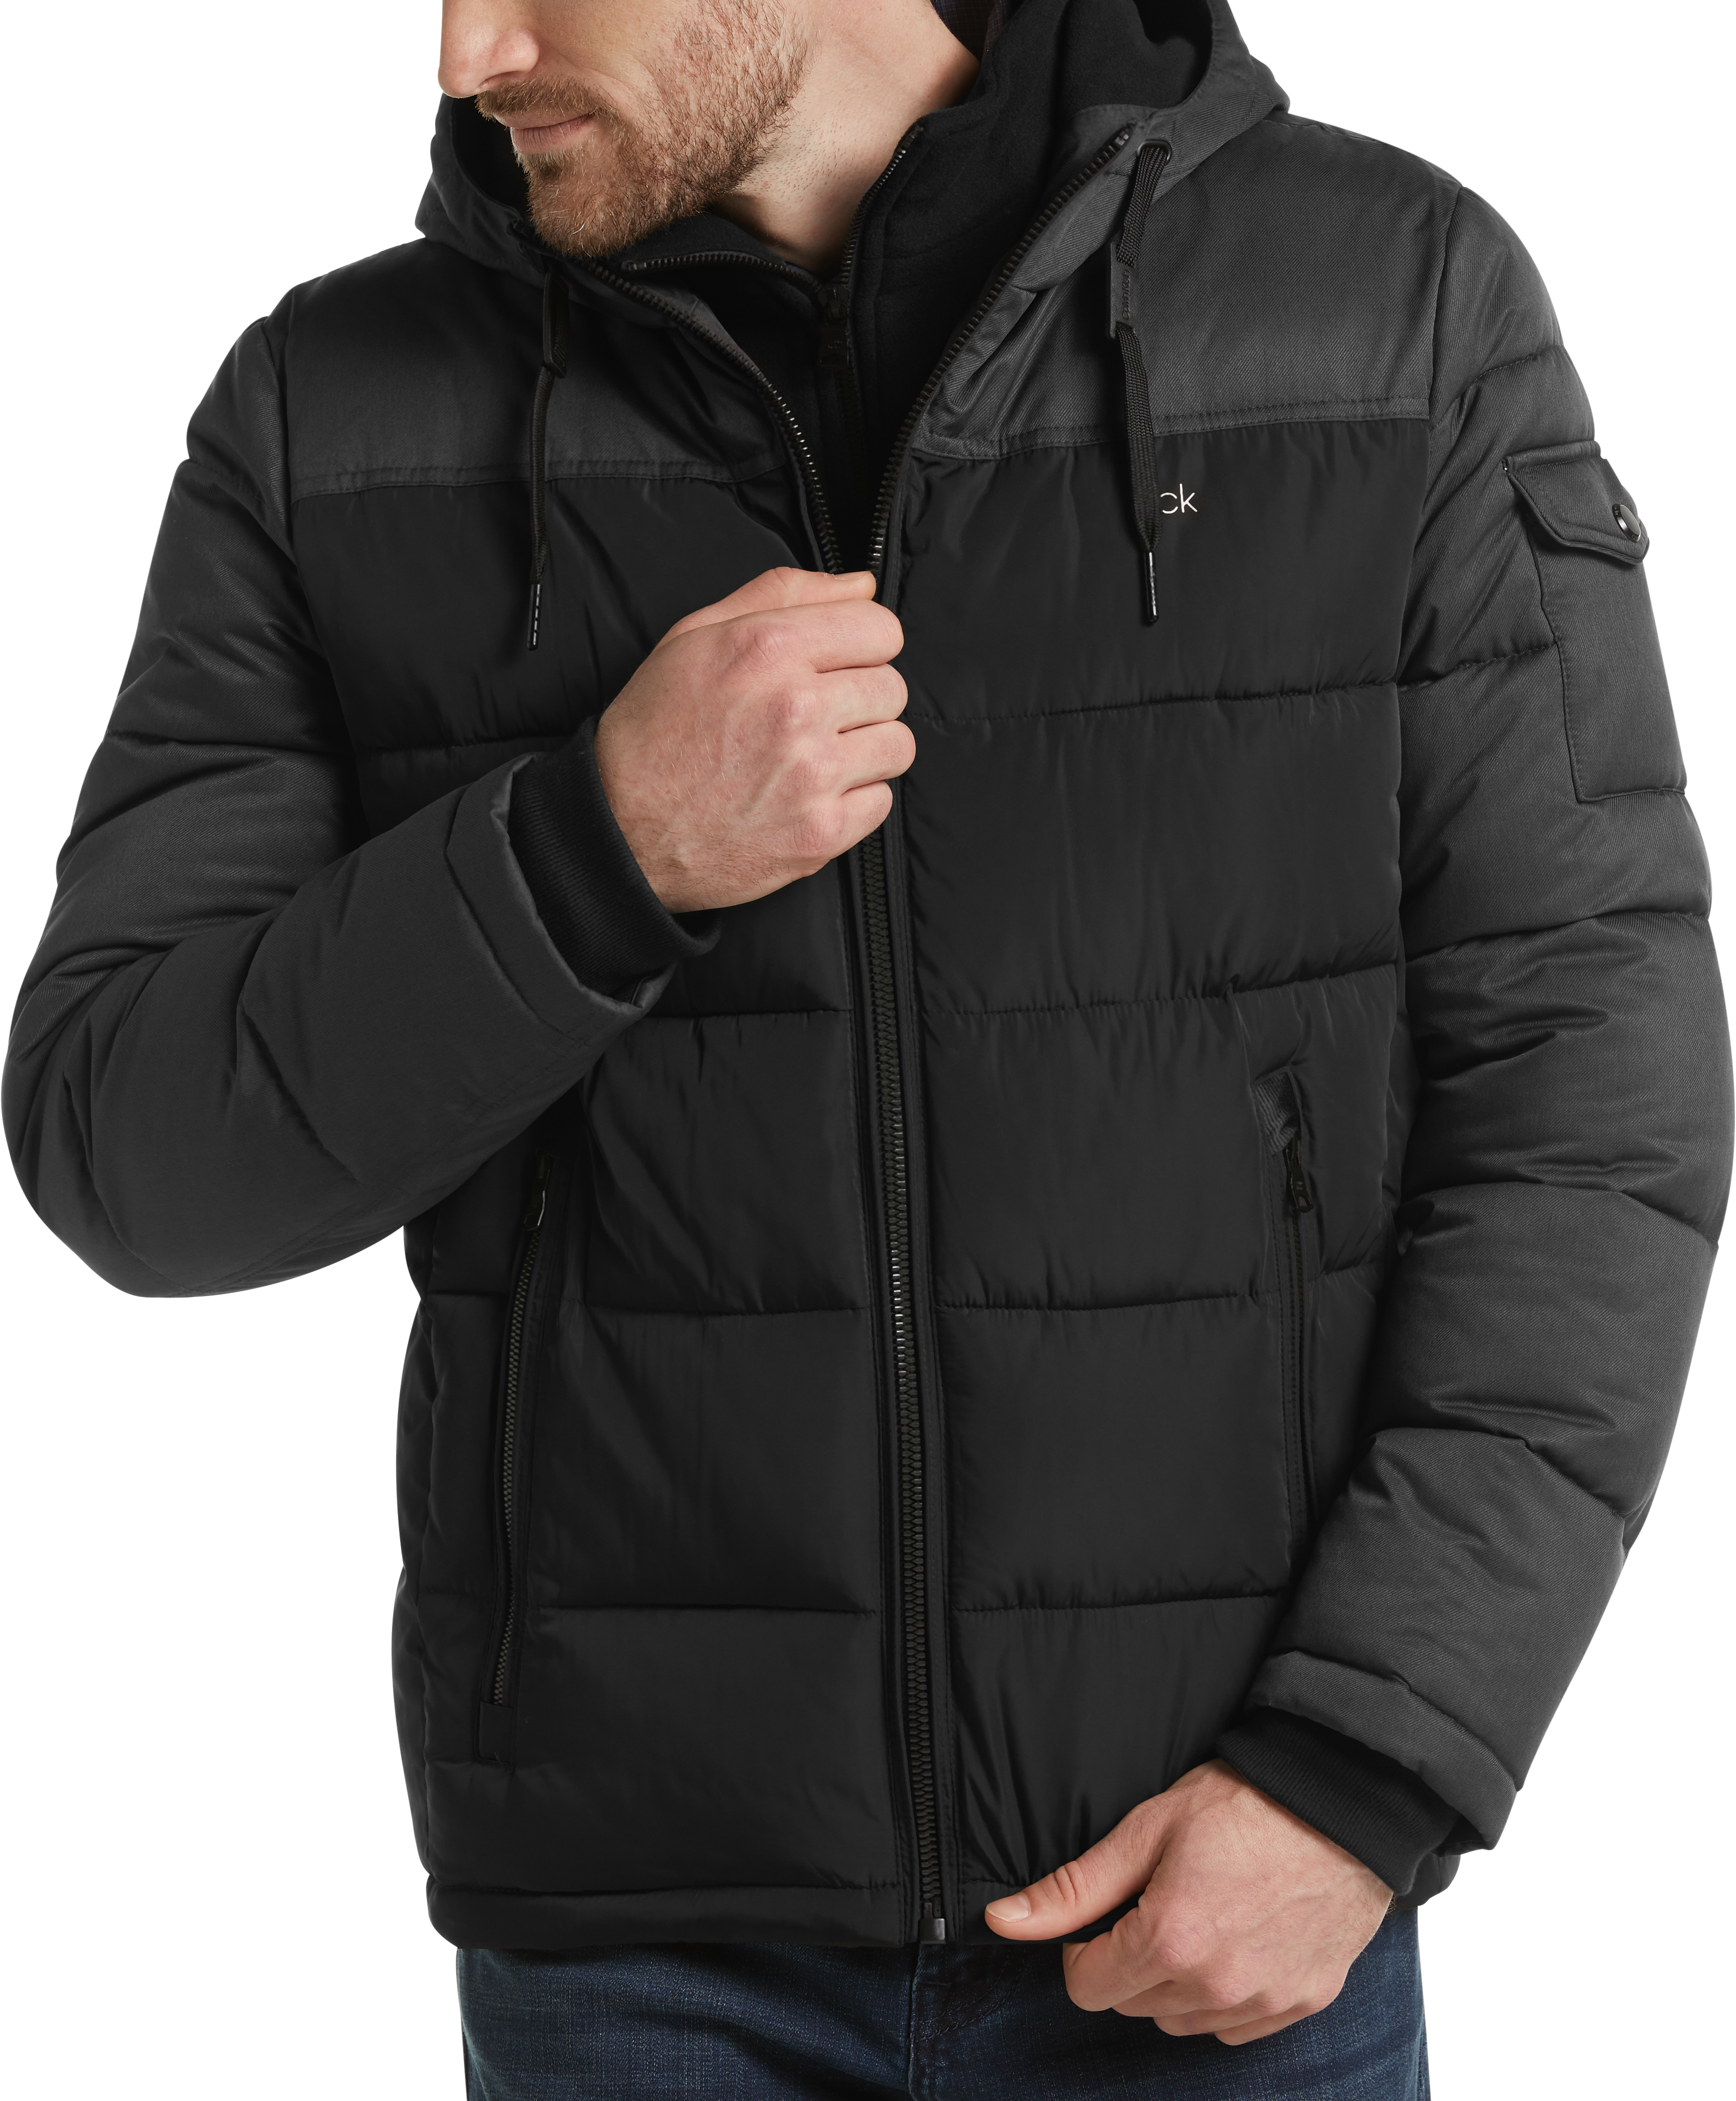 ck winter jackets mens